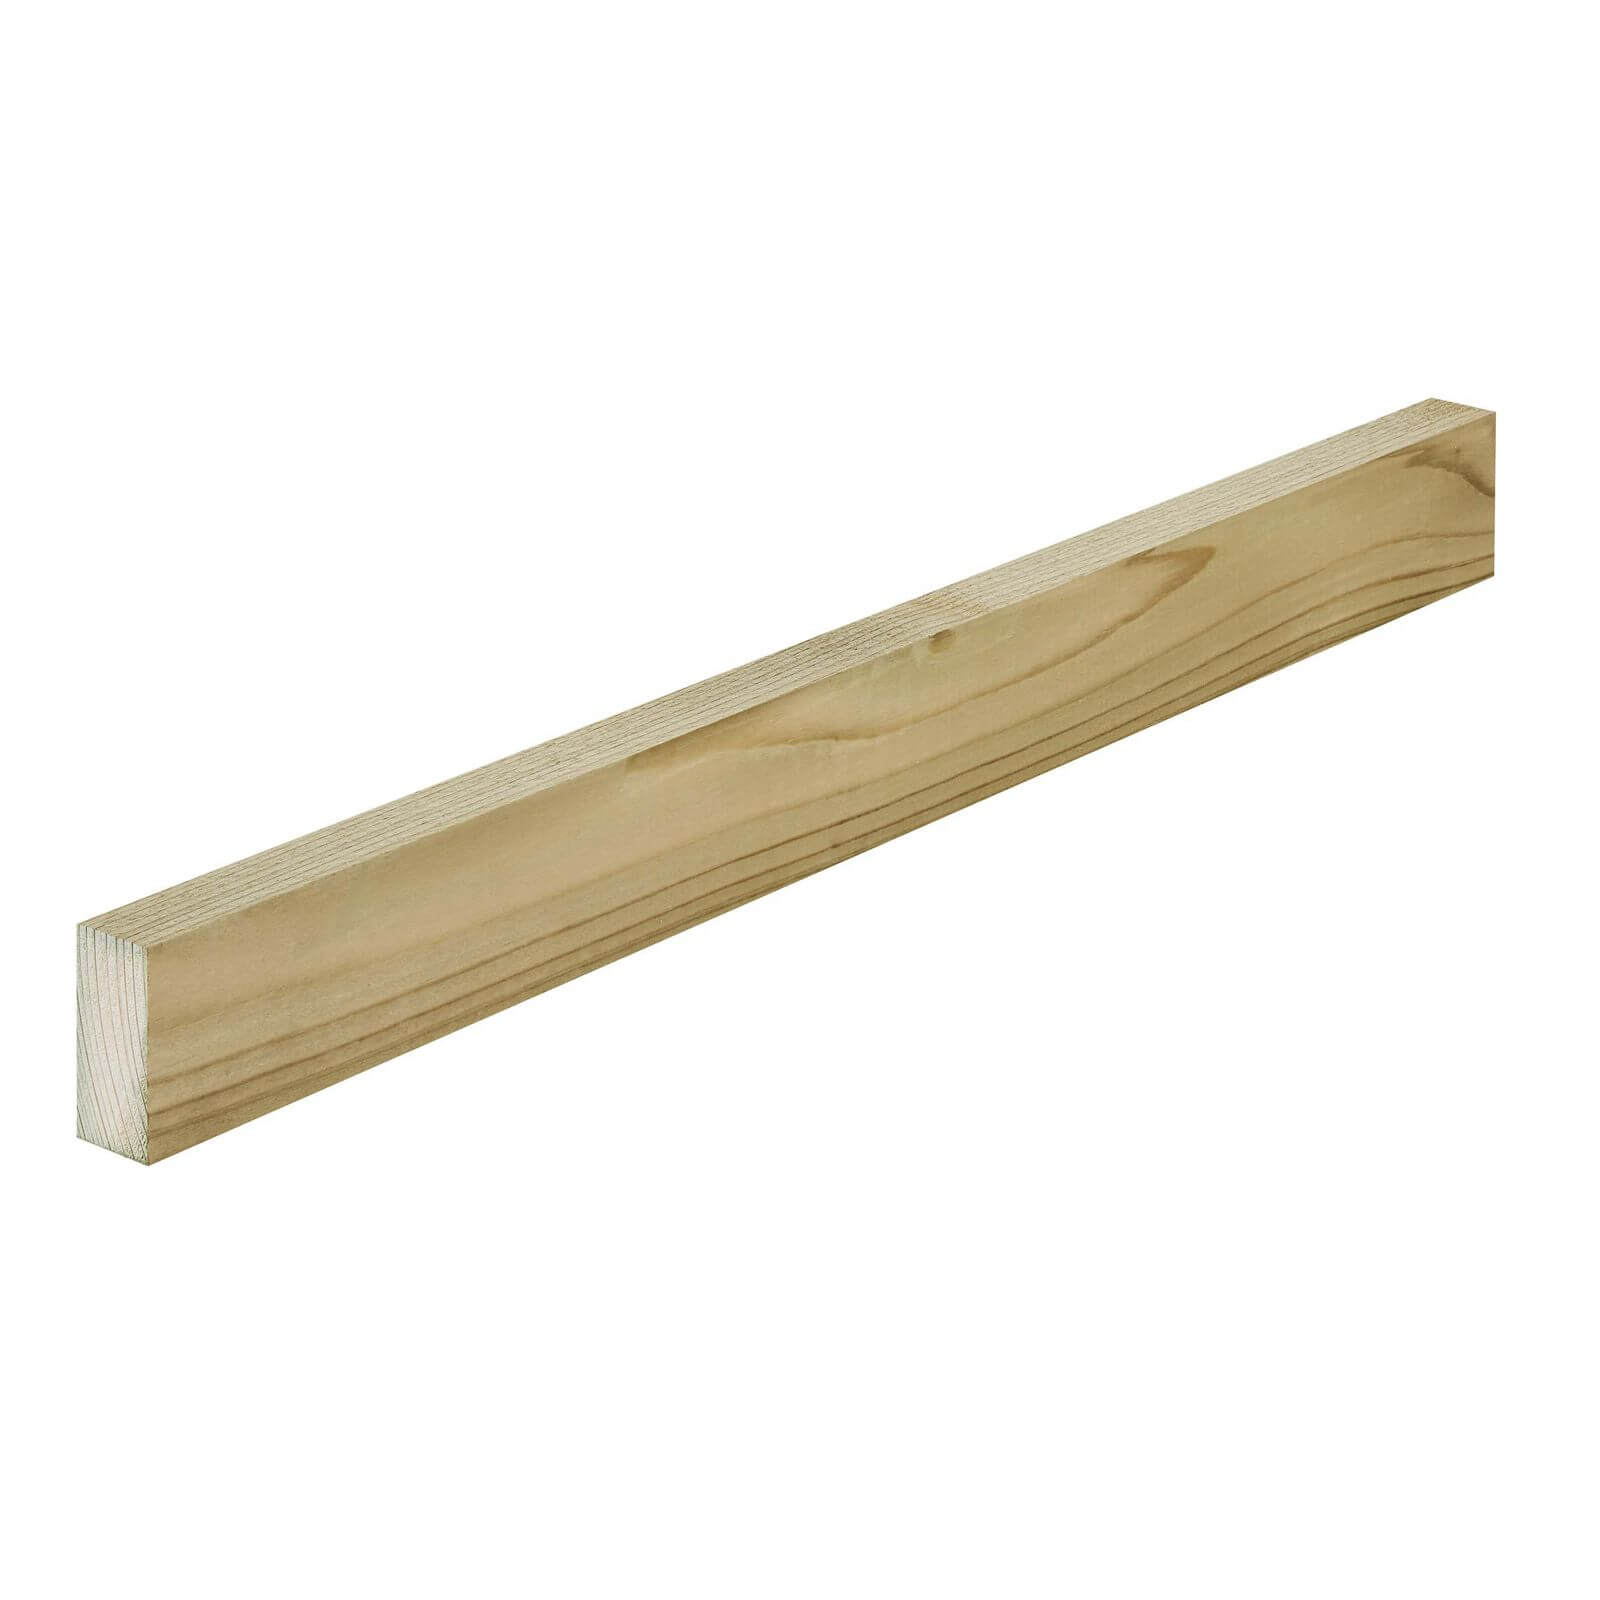 Metsa Sawn Treated Stick Softwood Timber 2.4m (22 x 47 x 2400mm)